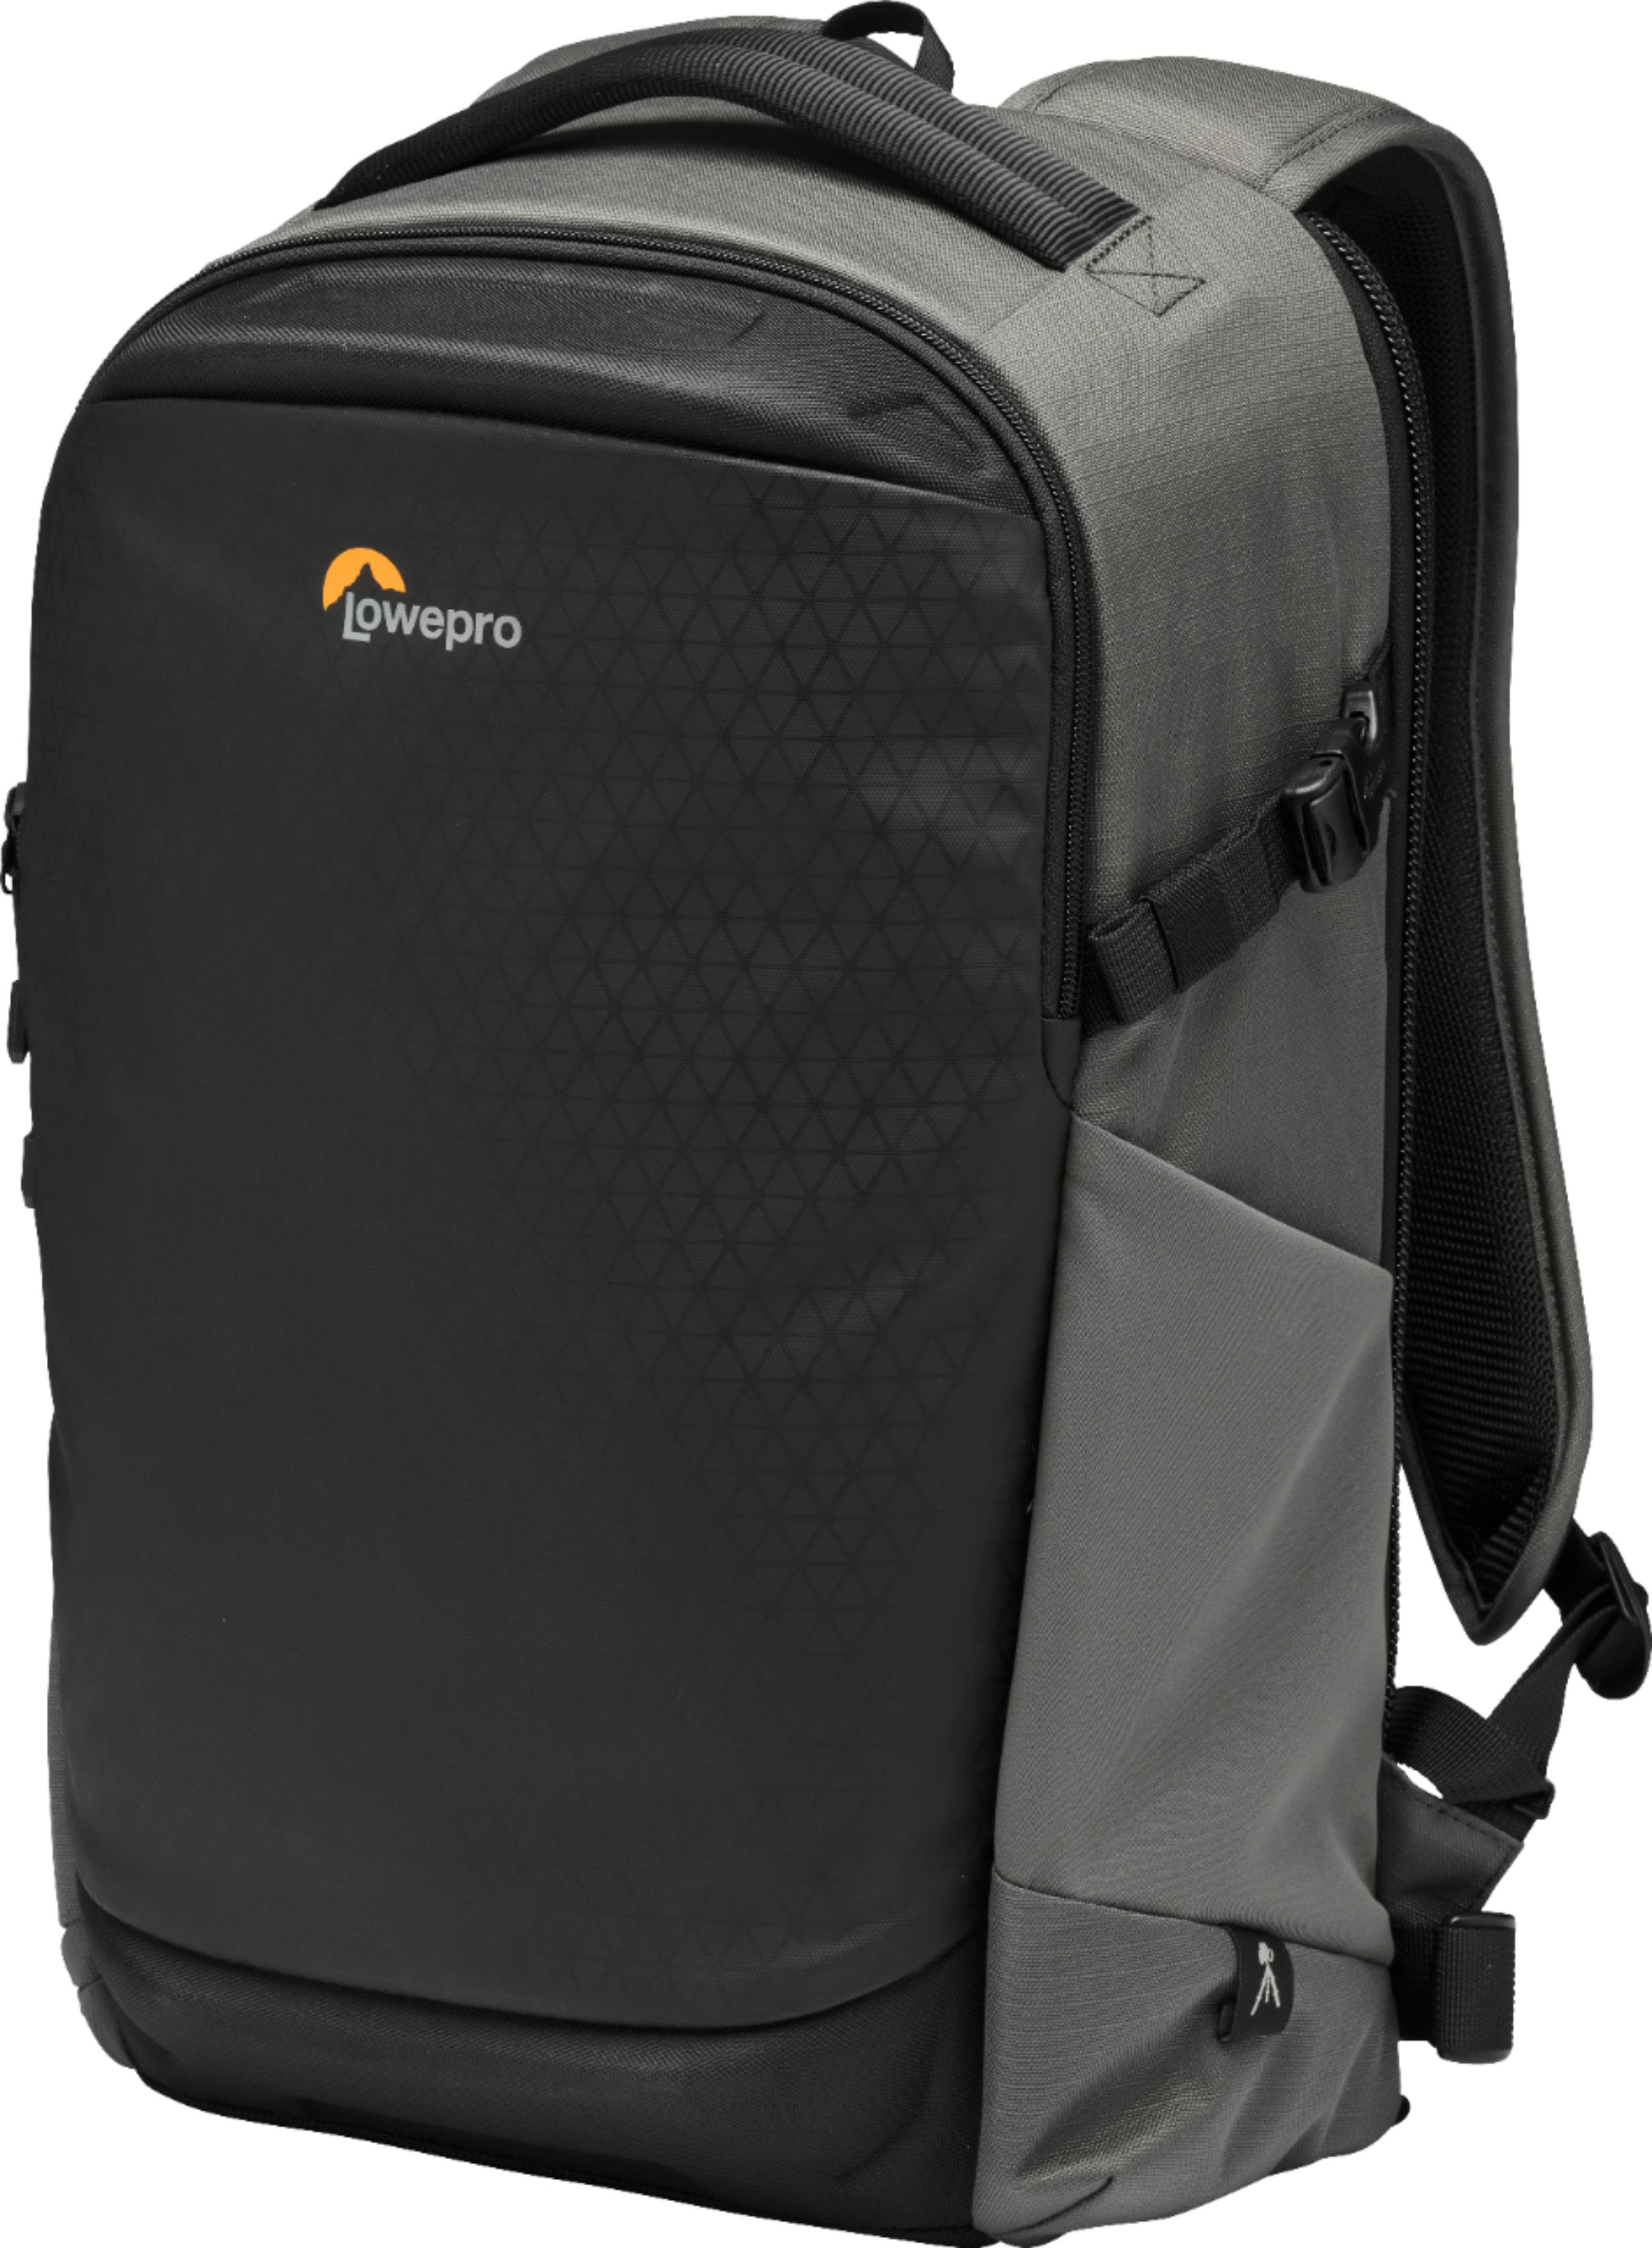 Angle View: High Sierra - XBT TSA Laptop Backpack for 17" Laptop - Black